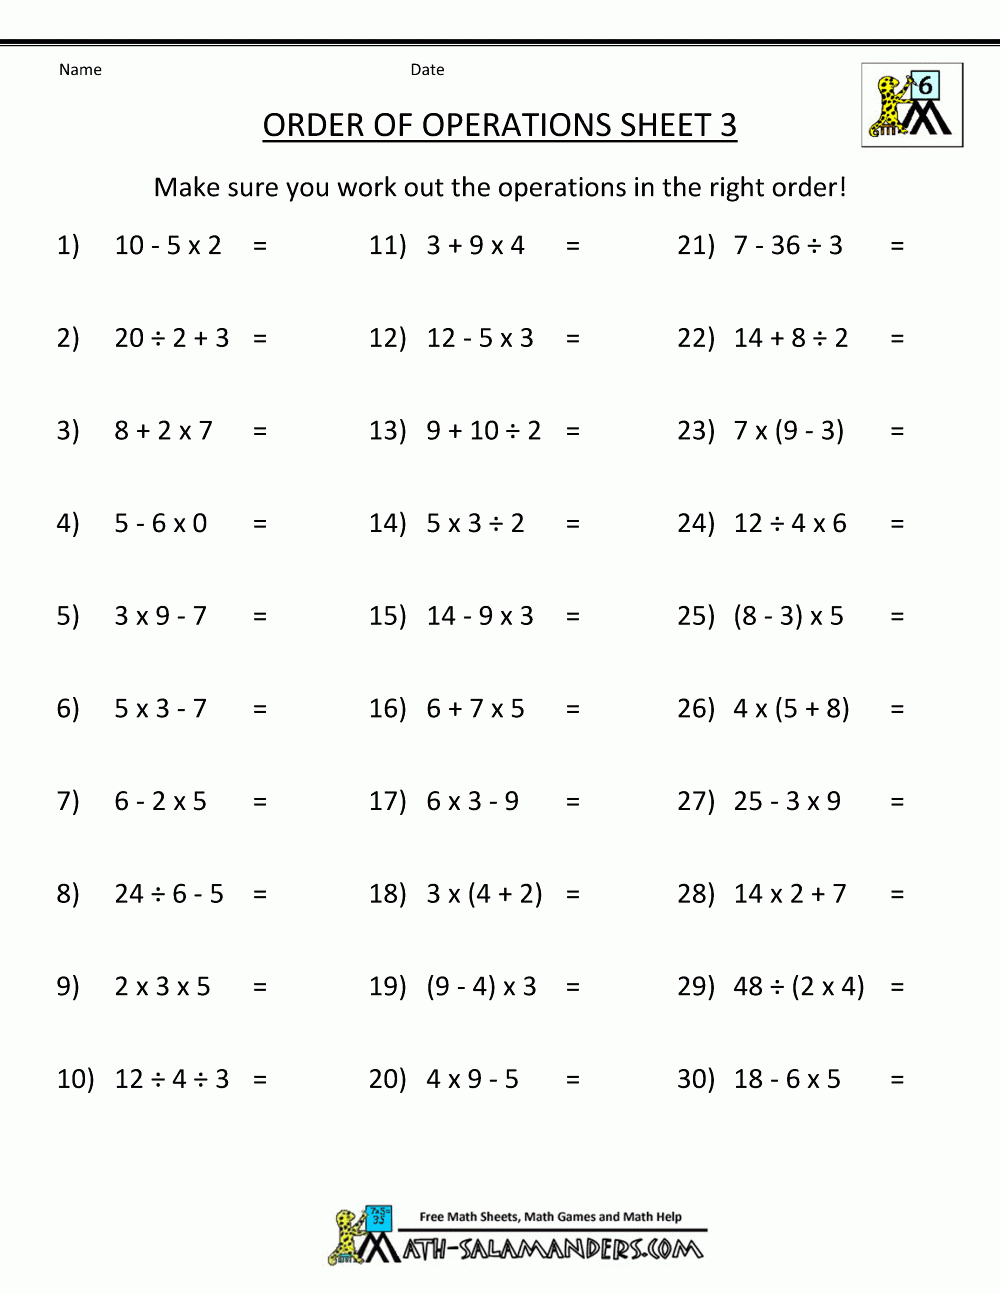 Image Result For Order Of Operations Worksheet 7th Grade Math 